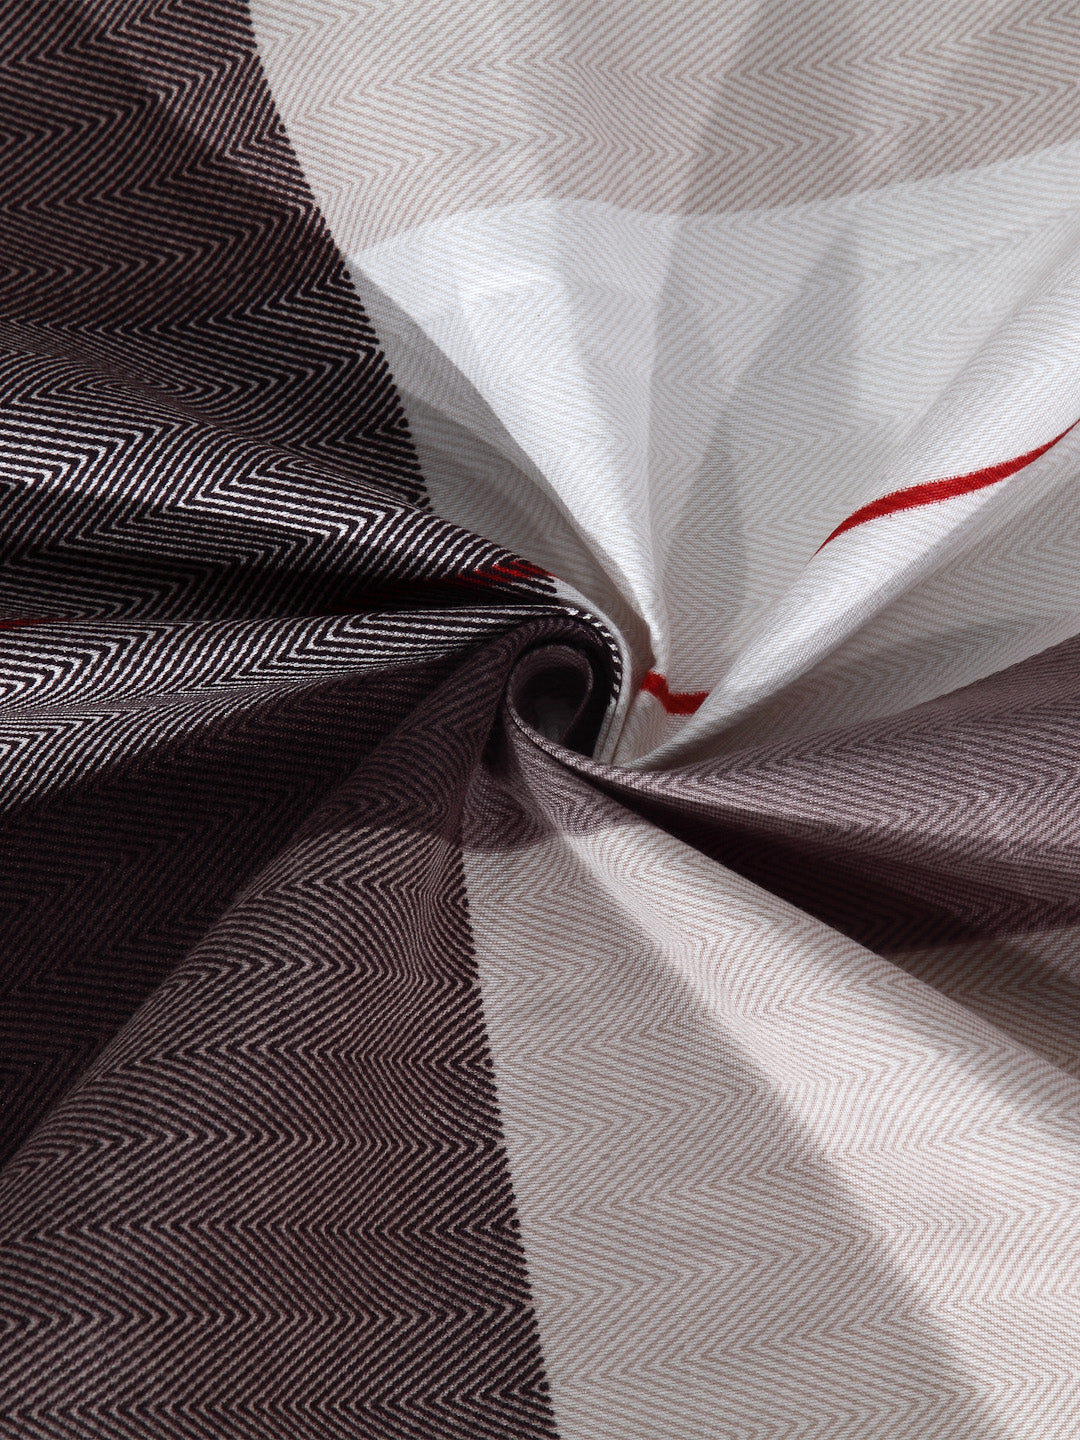 Arrabi Beige Stripes TC Cotton Blend Double Size Bedsheet with 2 Pillow Cover